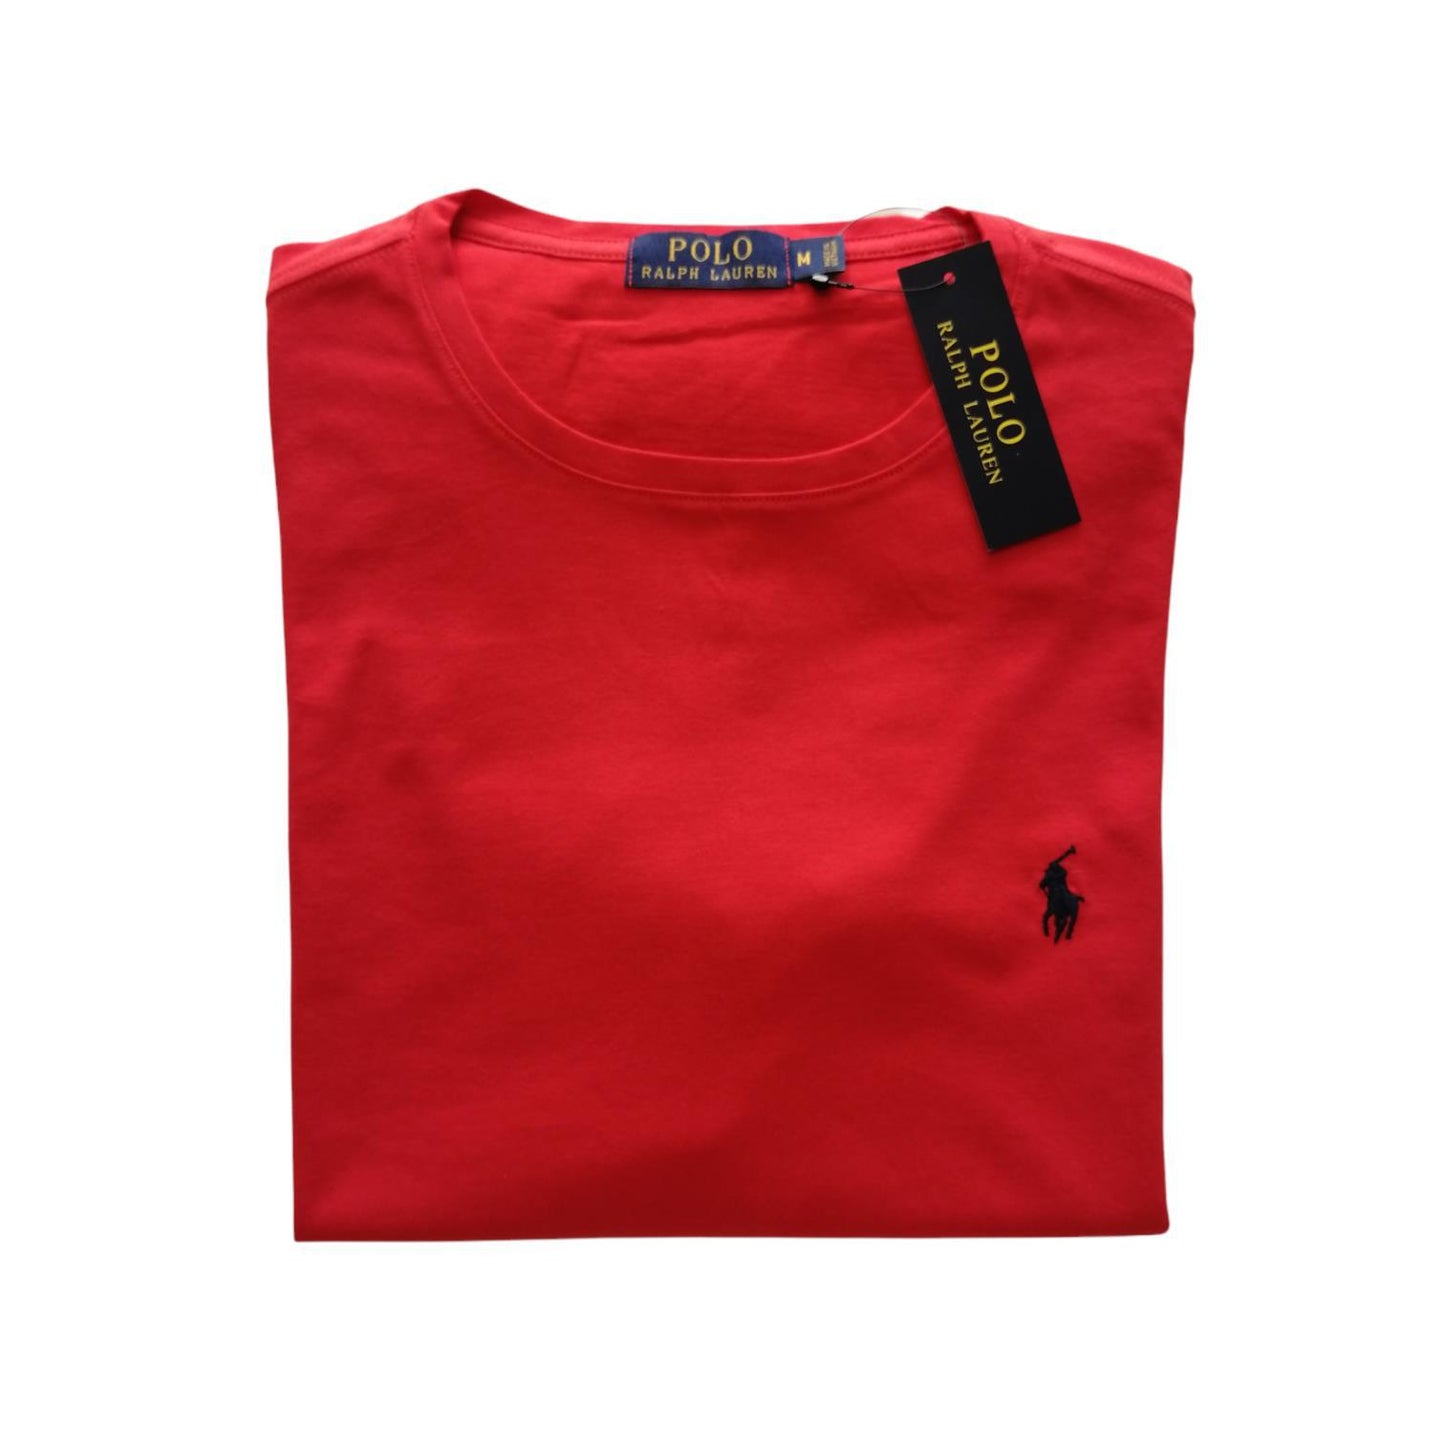 Camiseta cuello redondo manga corta color rojo Ralph Lauren